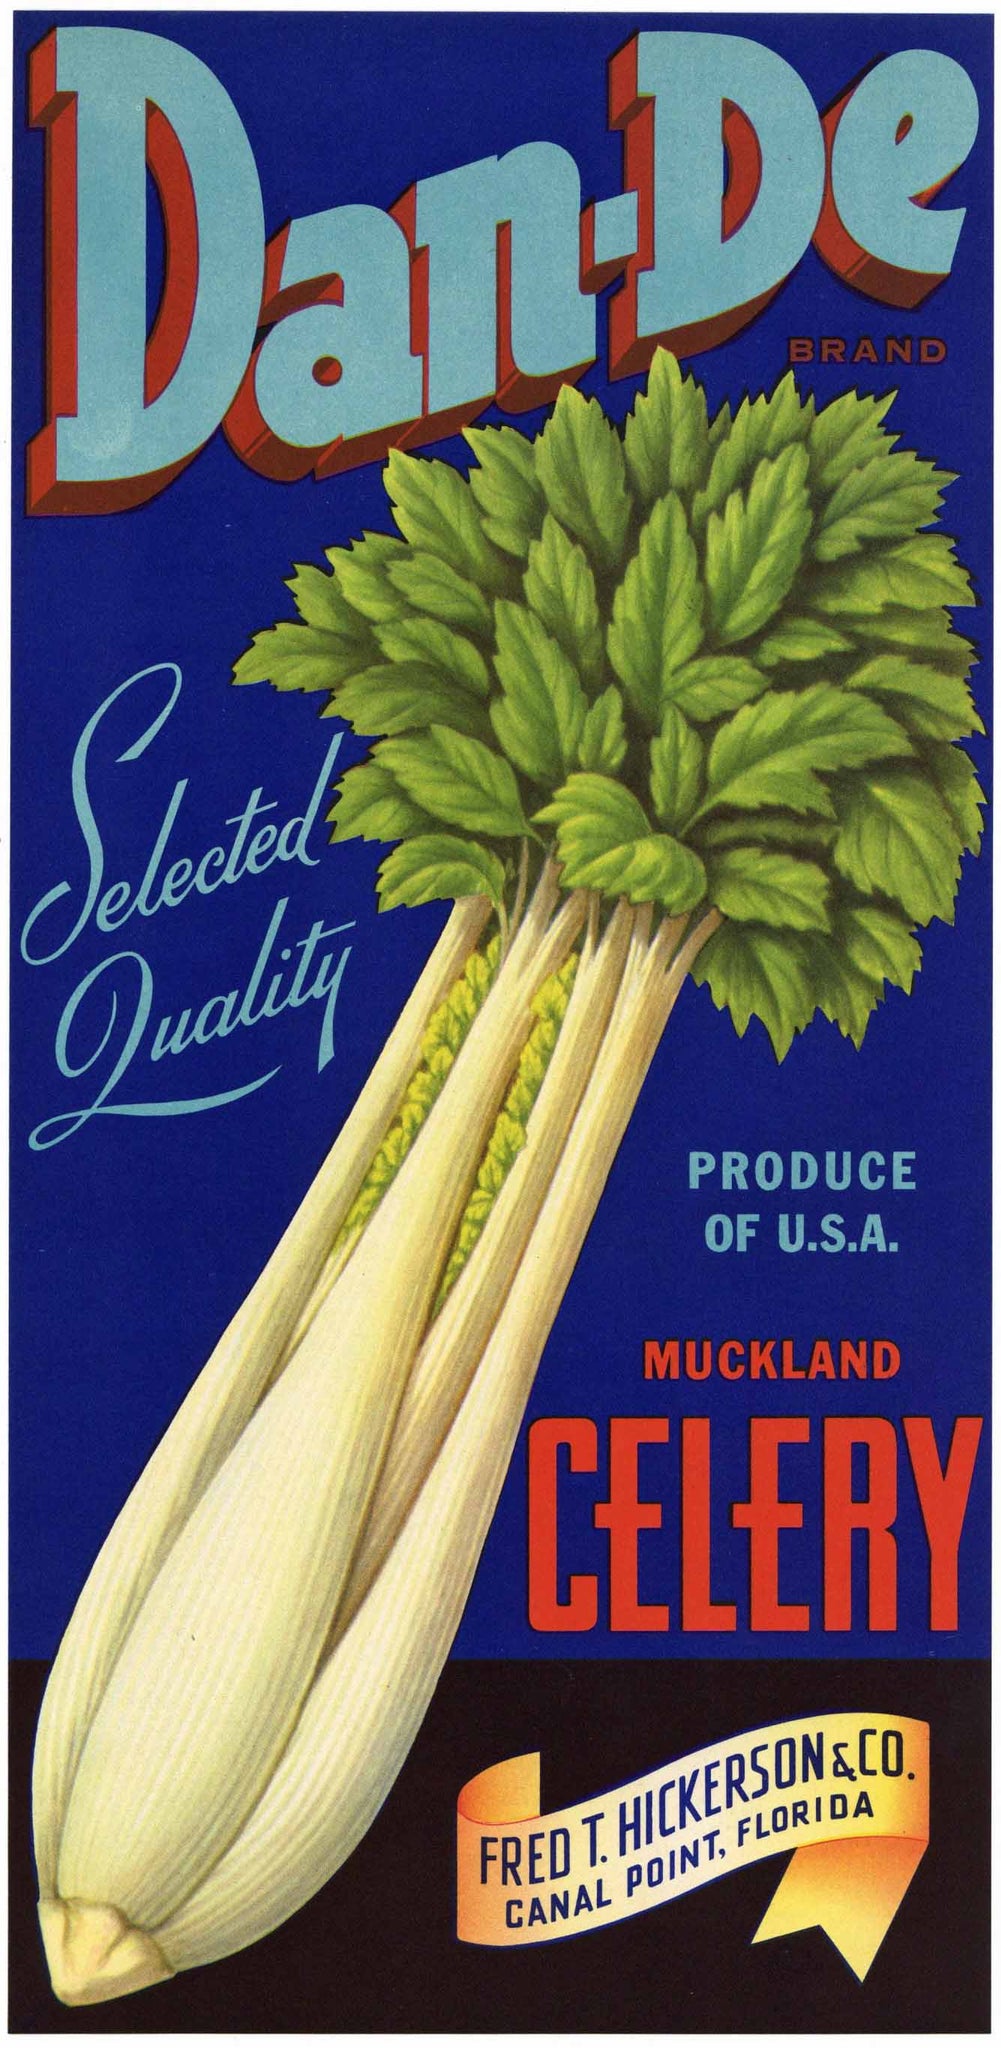 Dan-De Brand Vintage Canal Point Florida Celery Crate Label